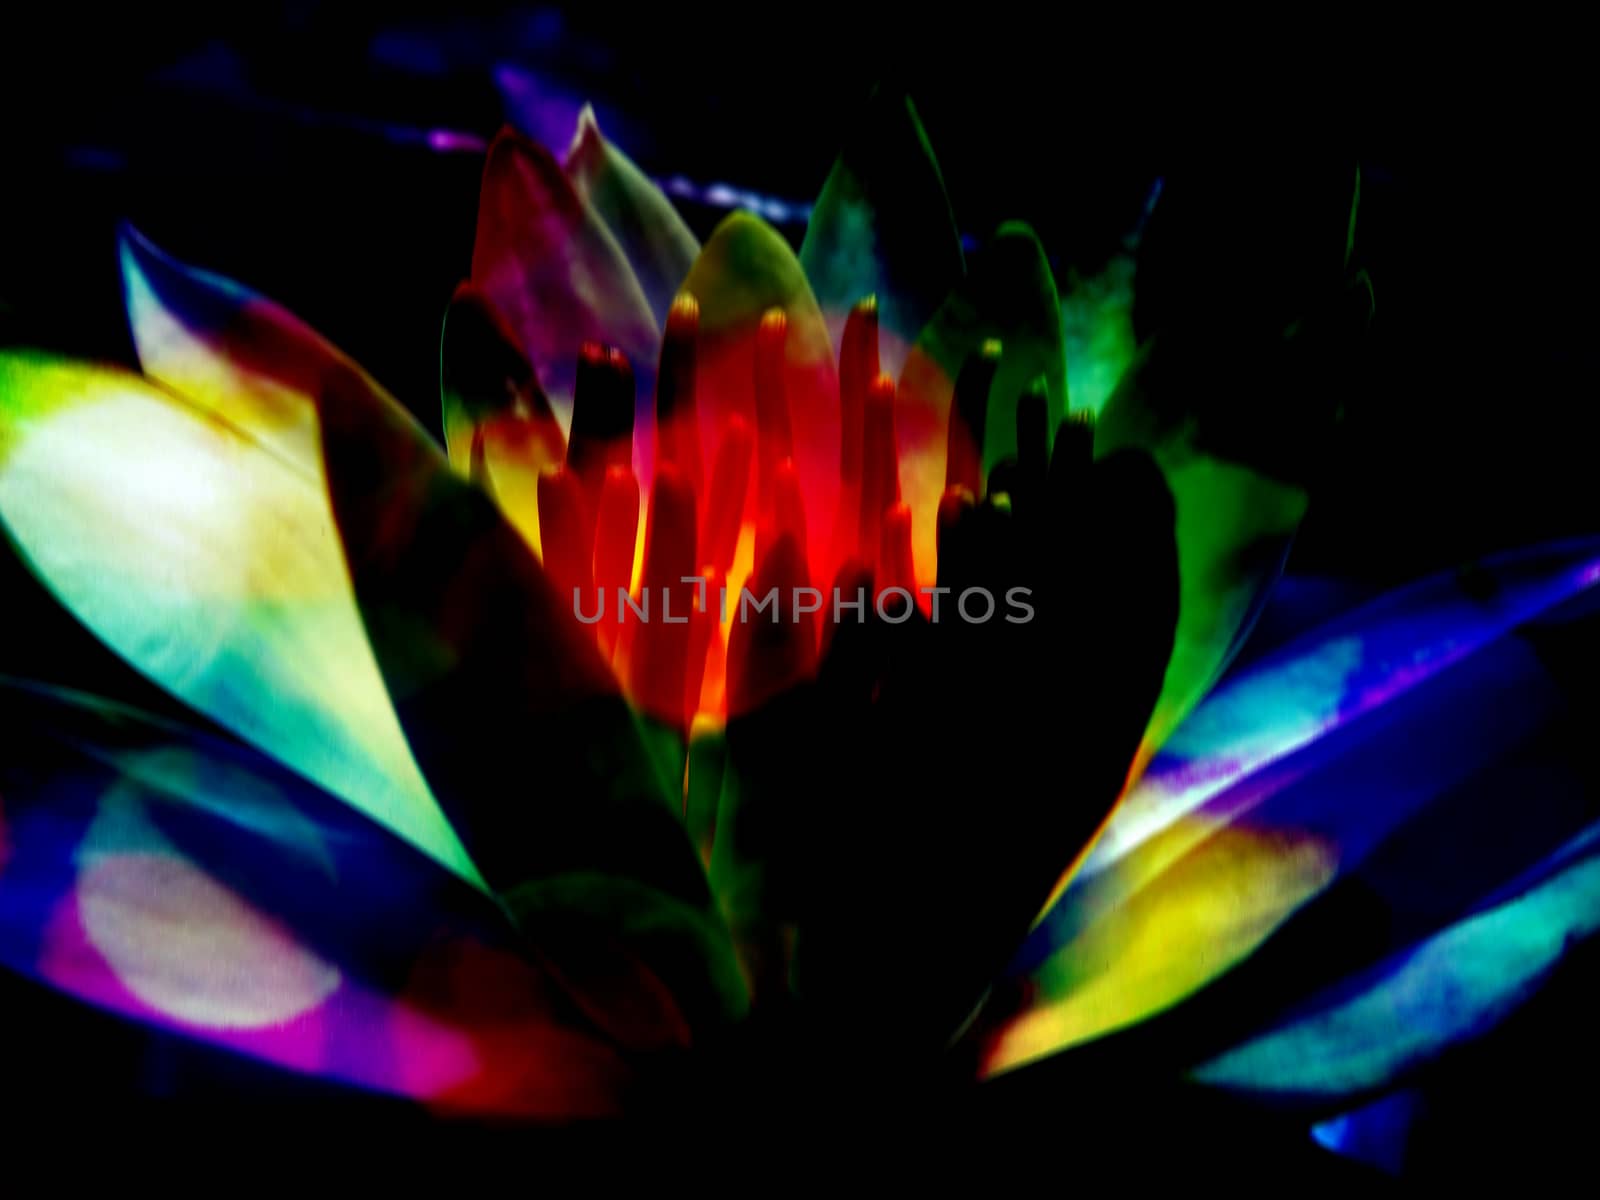 A metaphorical image of a spiritual lotus radiating colorful energies.